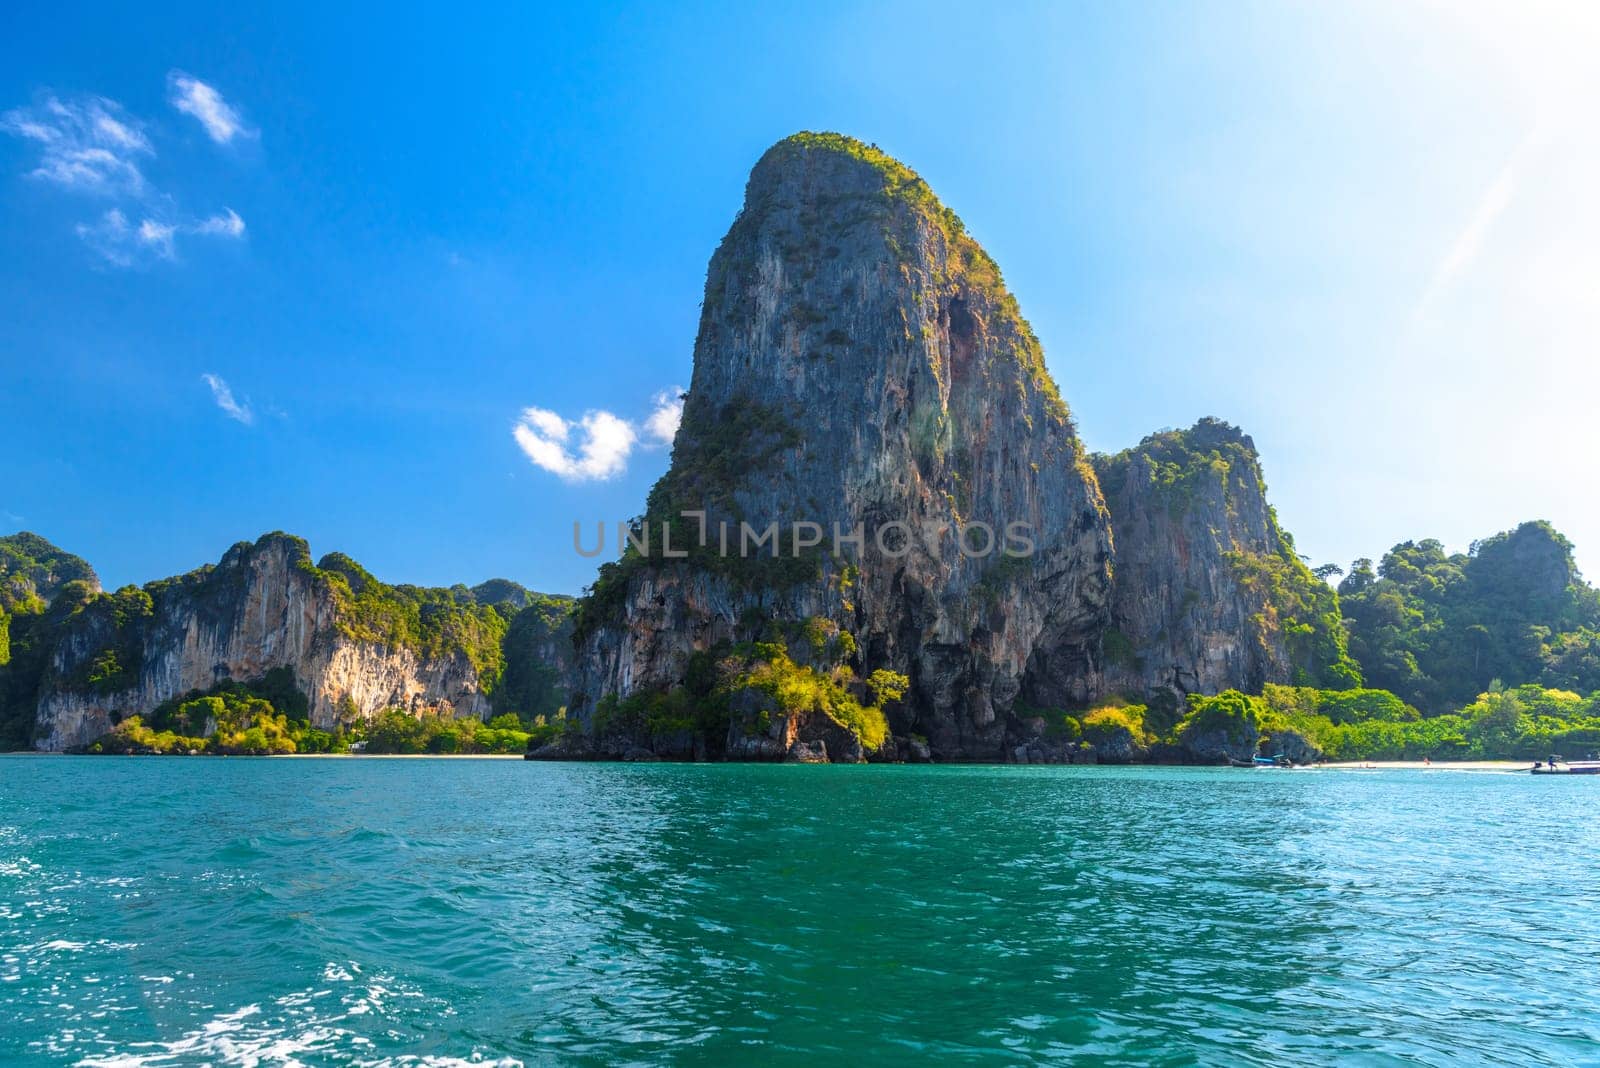 Huge cliff rocks in azure water, Railay beach, Ao Nang, Krabi, Thailand.